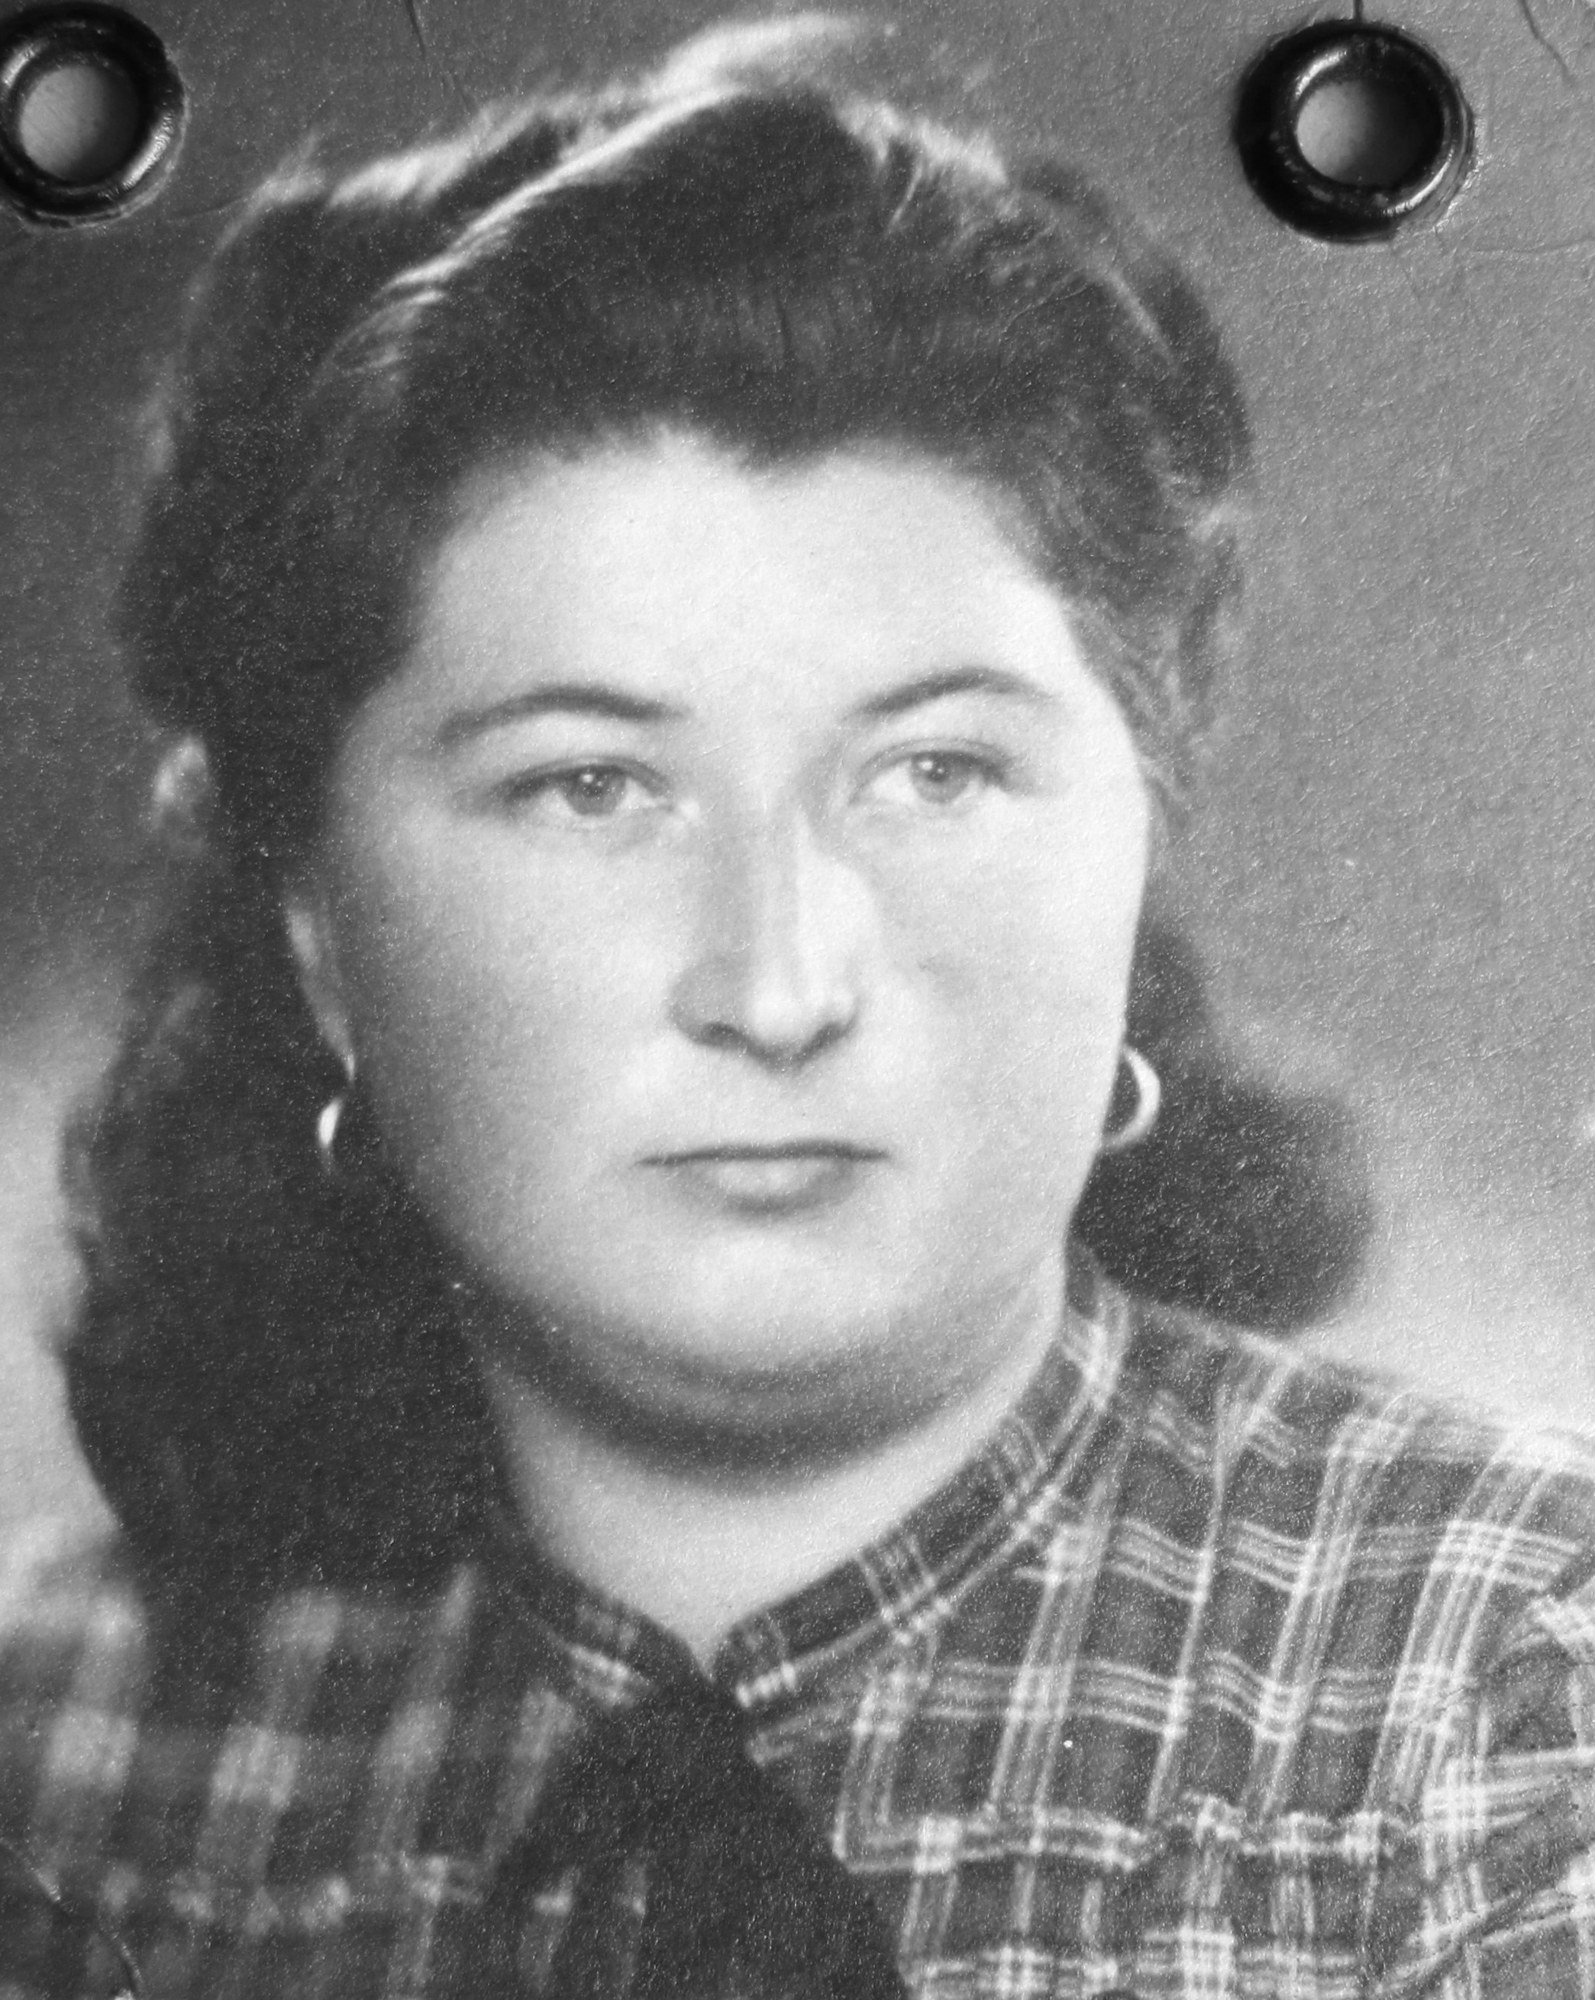 Olga Čvančarová v roce 1948.JPG (historic)